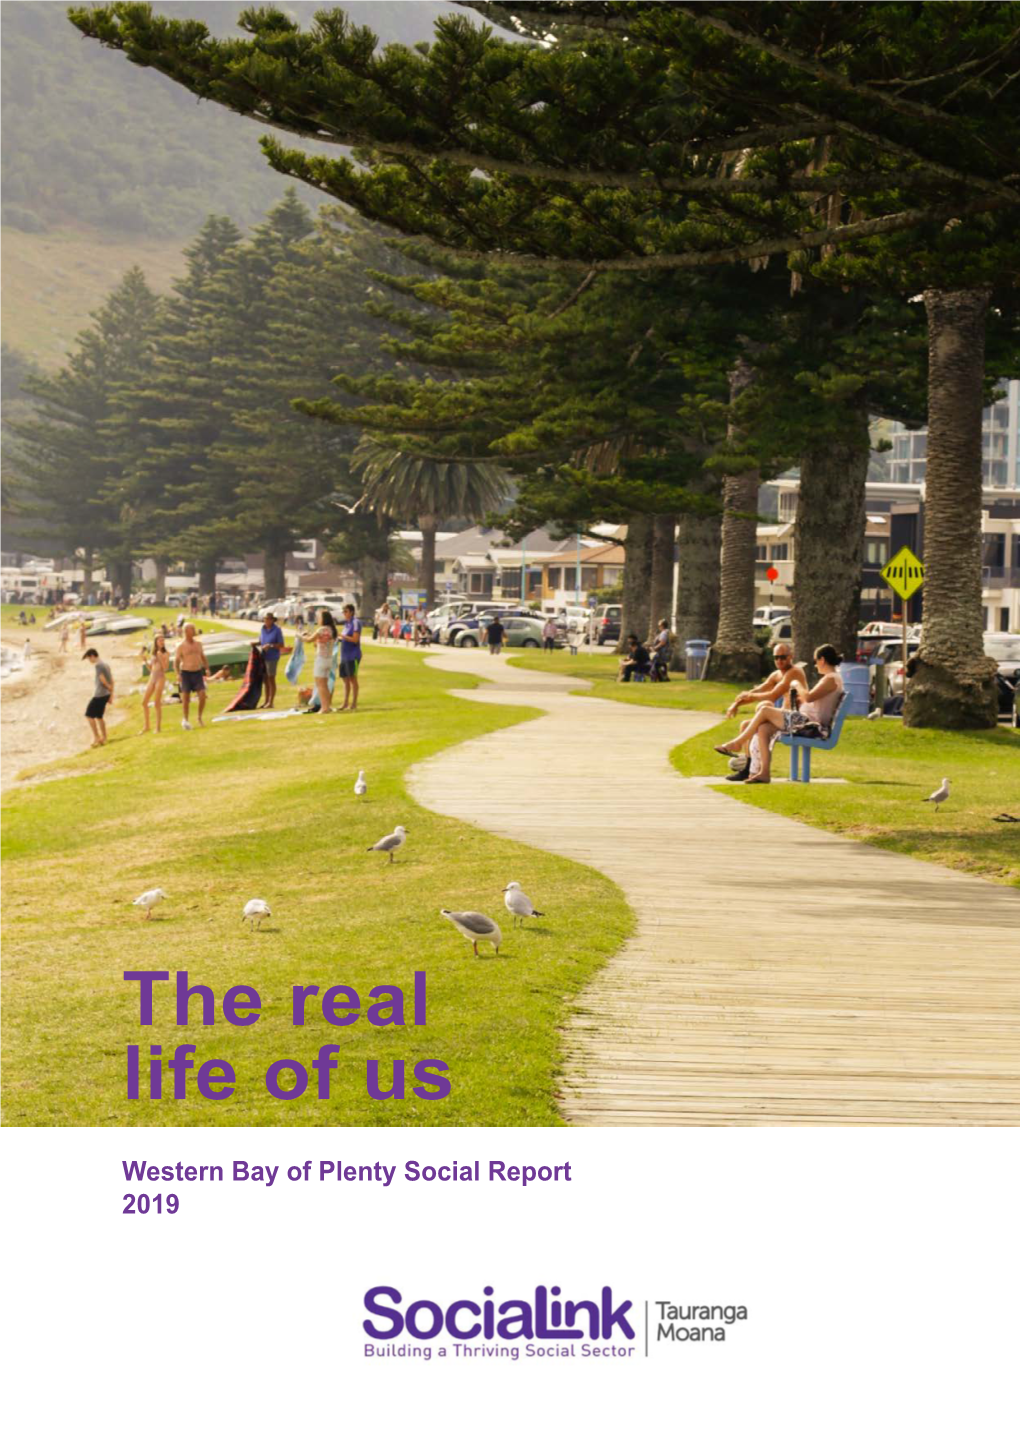 Western Bay of Plenty Social Report 2019 Contents